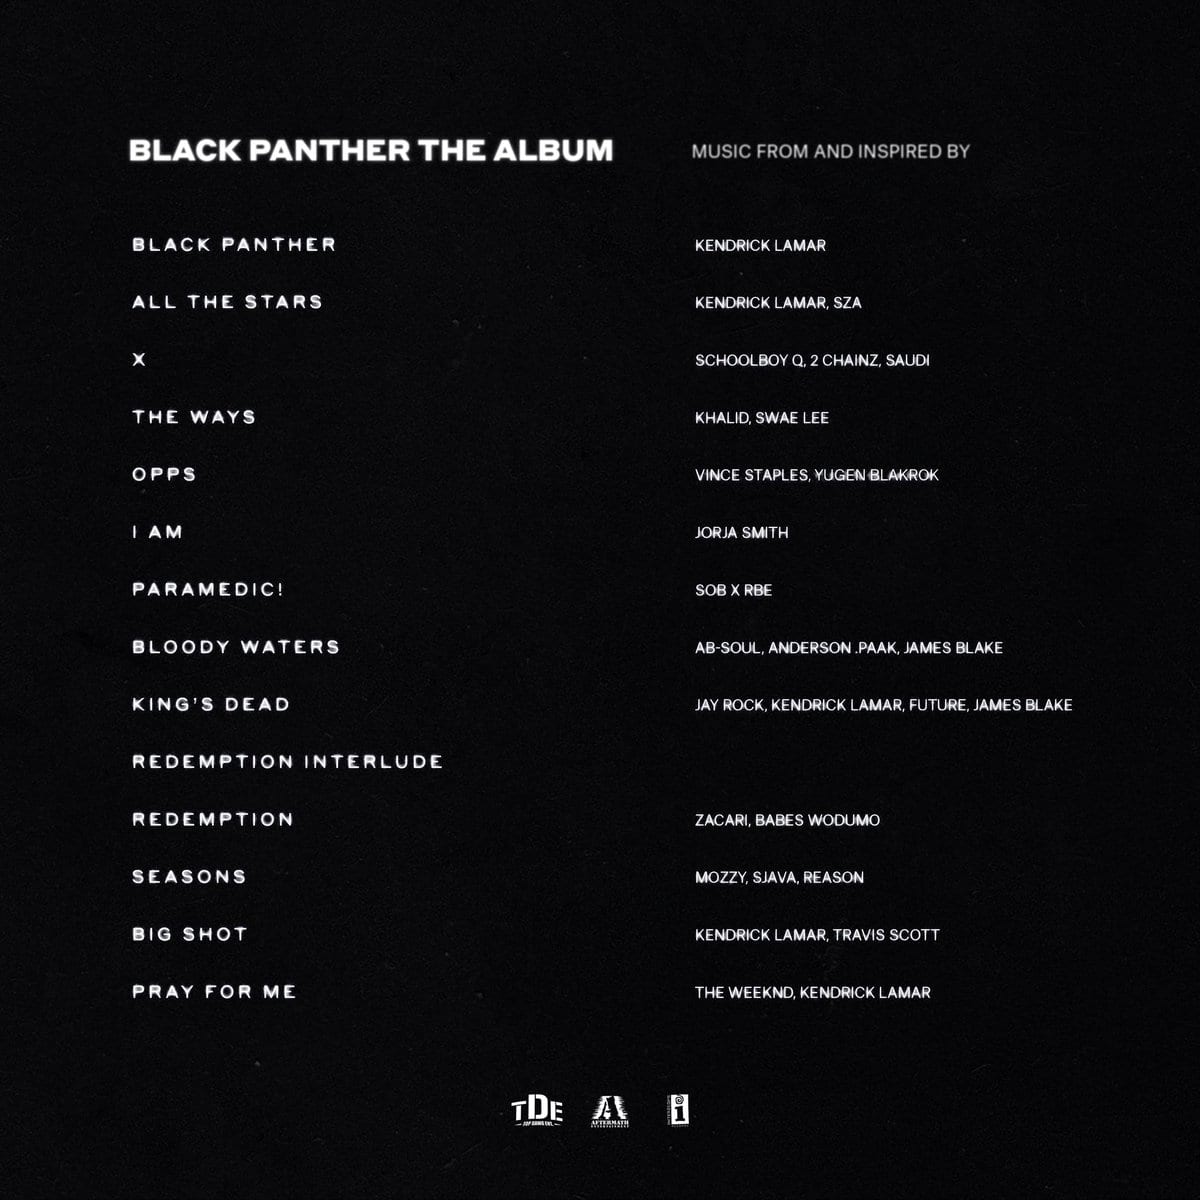 Kendrick Lamar & Various Artists - Black Panther [OST ALBUM], Kendrick Lamar, Various Artists, Black Panther, OST, ALBUM, download, cdq, 320kbps, audiomack, dopefile, datafilehost, toxicwap, fakaza, mp3goo, zip, alac, zippy, album, descarger, gratis, telecharger, baixer, EP, rar, torrent, sharebeast